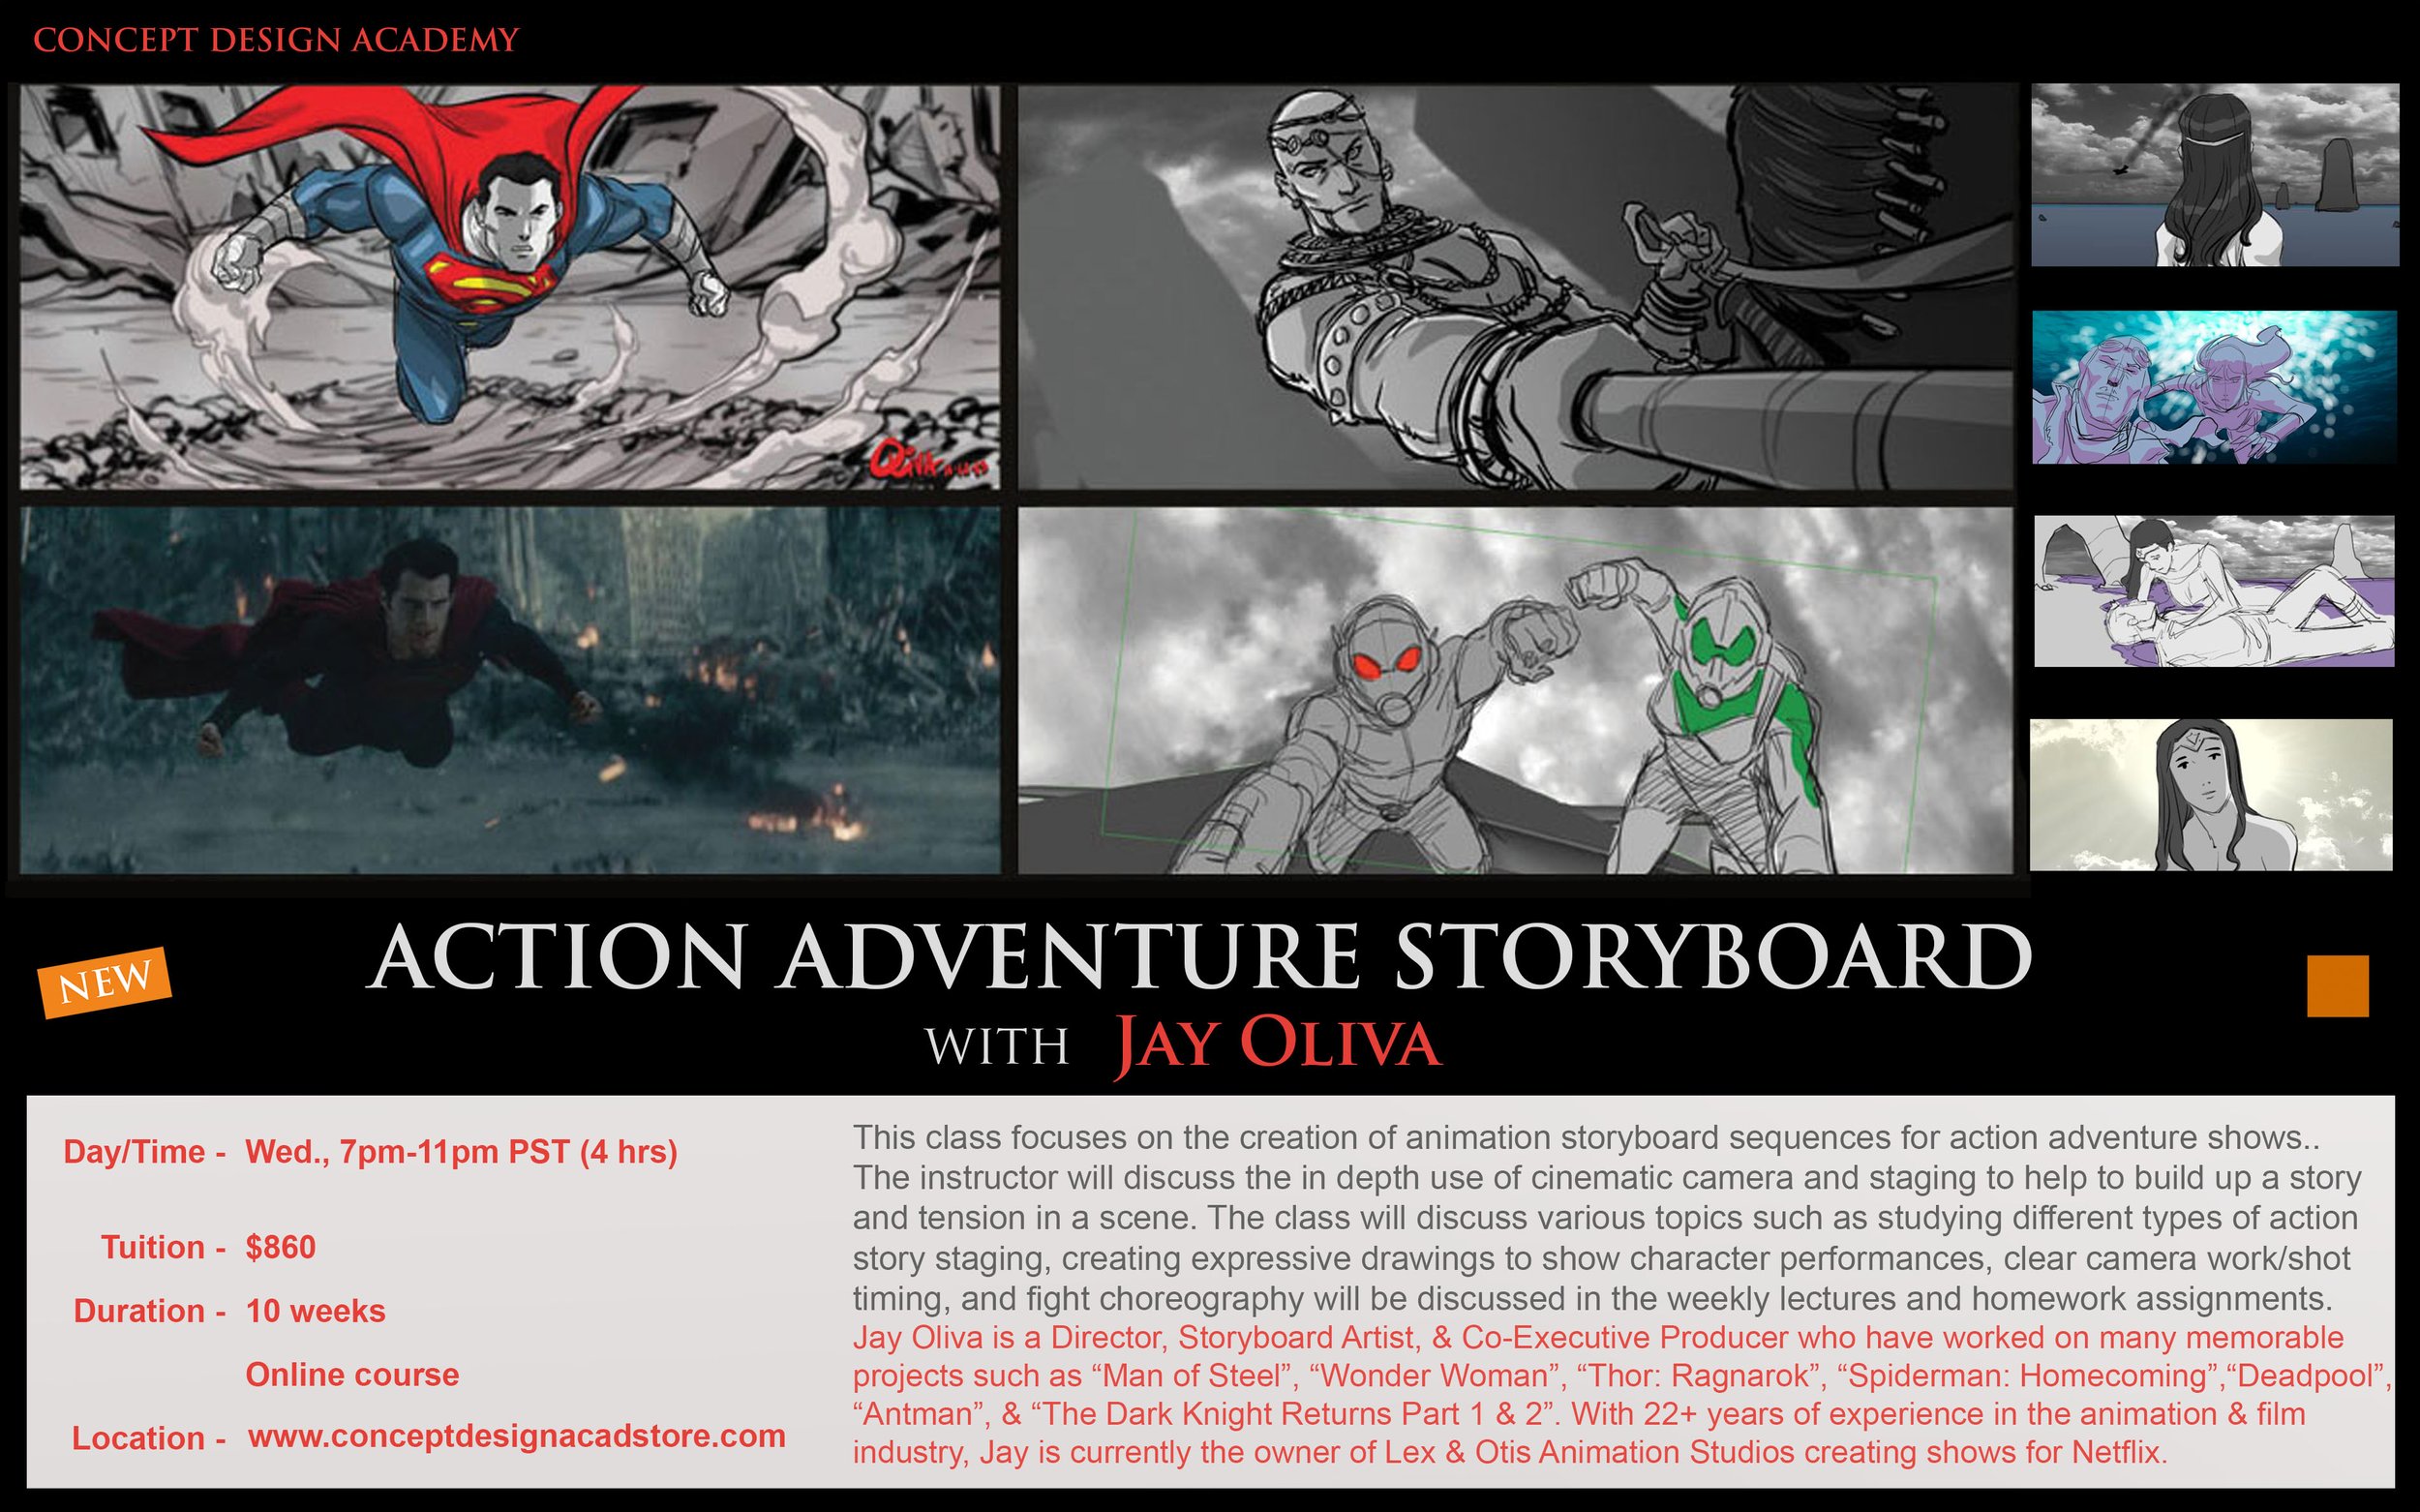 SP23 - Action Adventure Storyboard with Jay Oliva.jpg